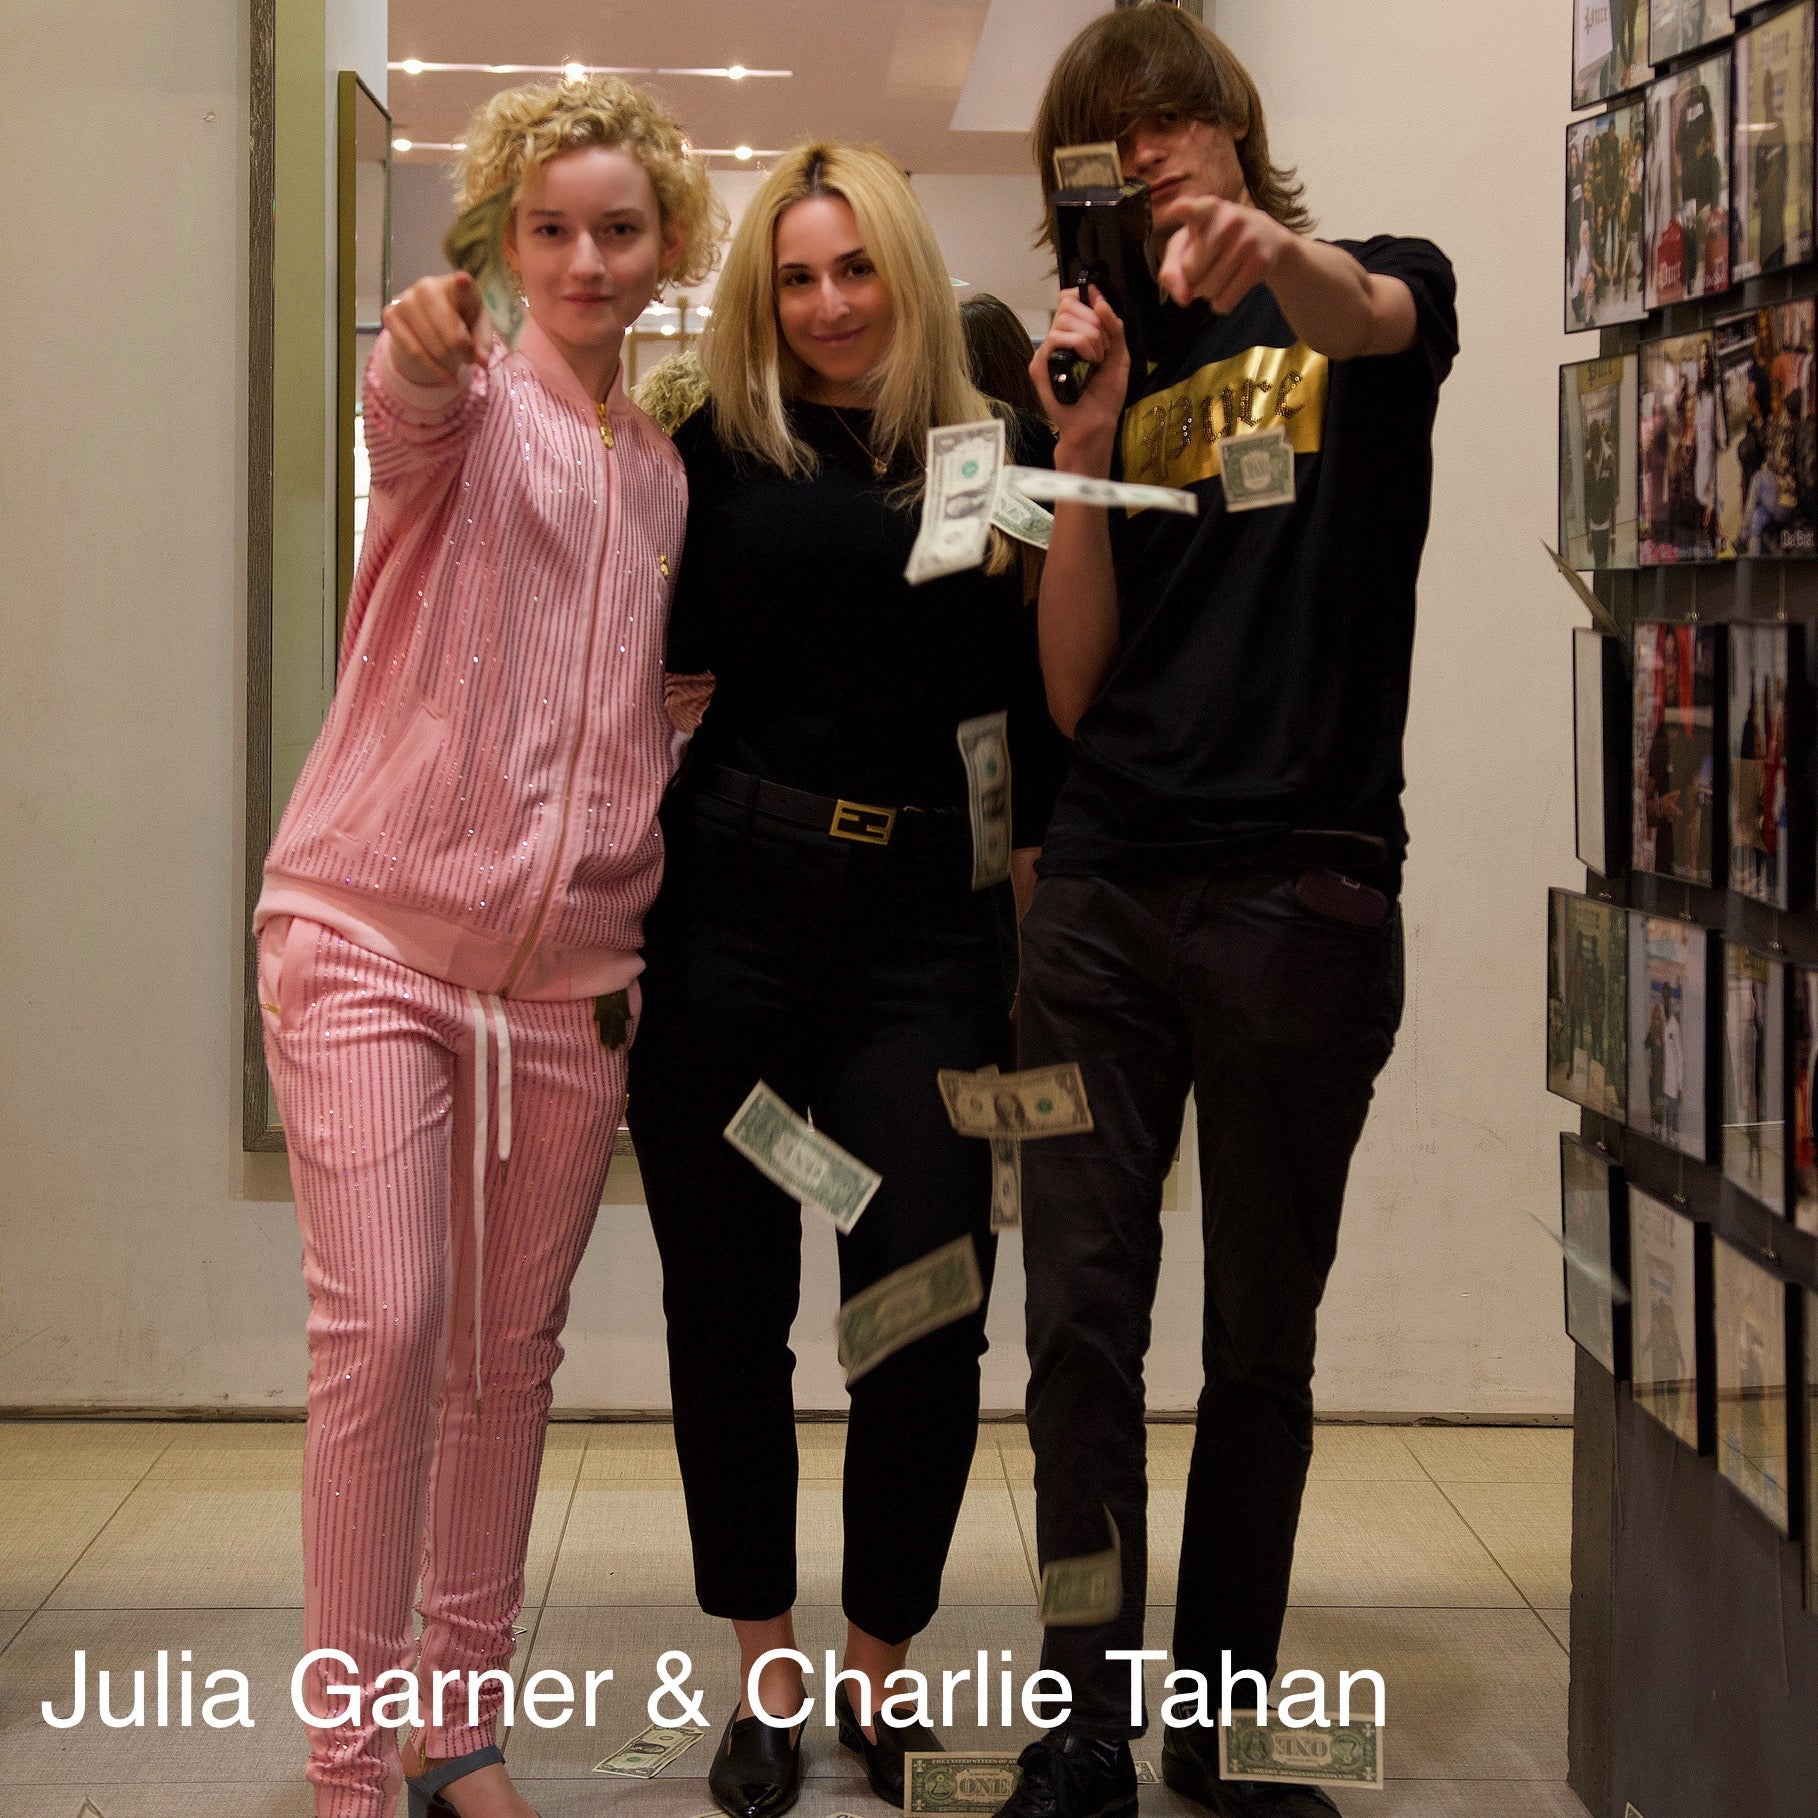 Julia Garner & Charlie Tahan